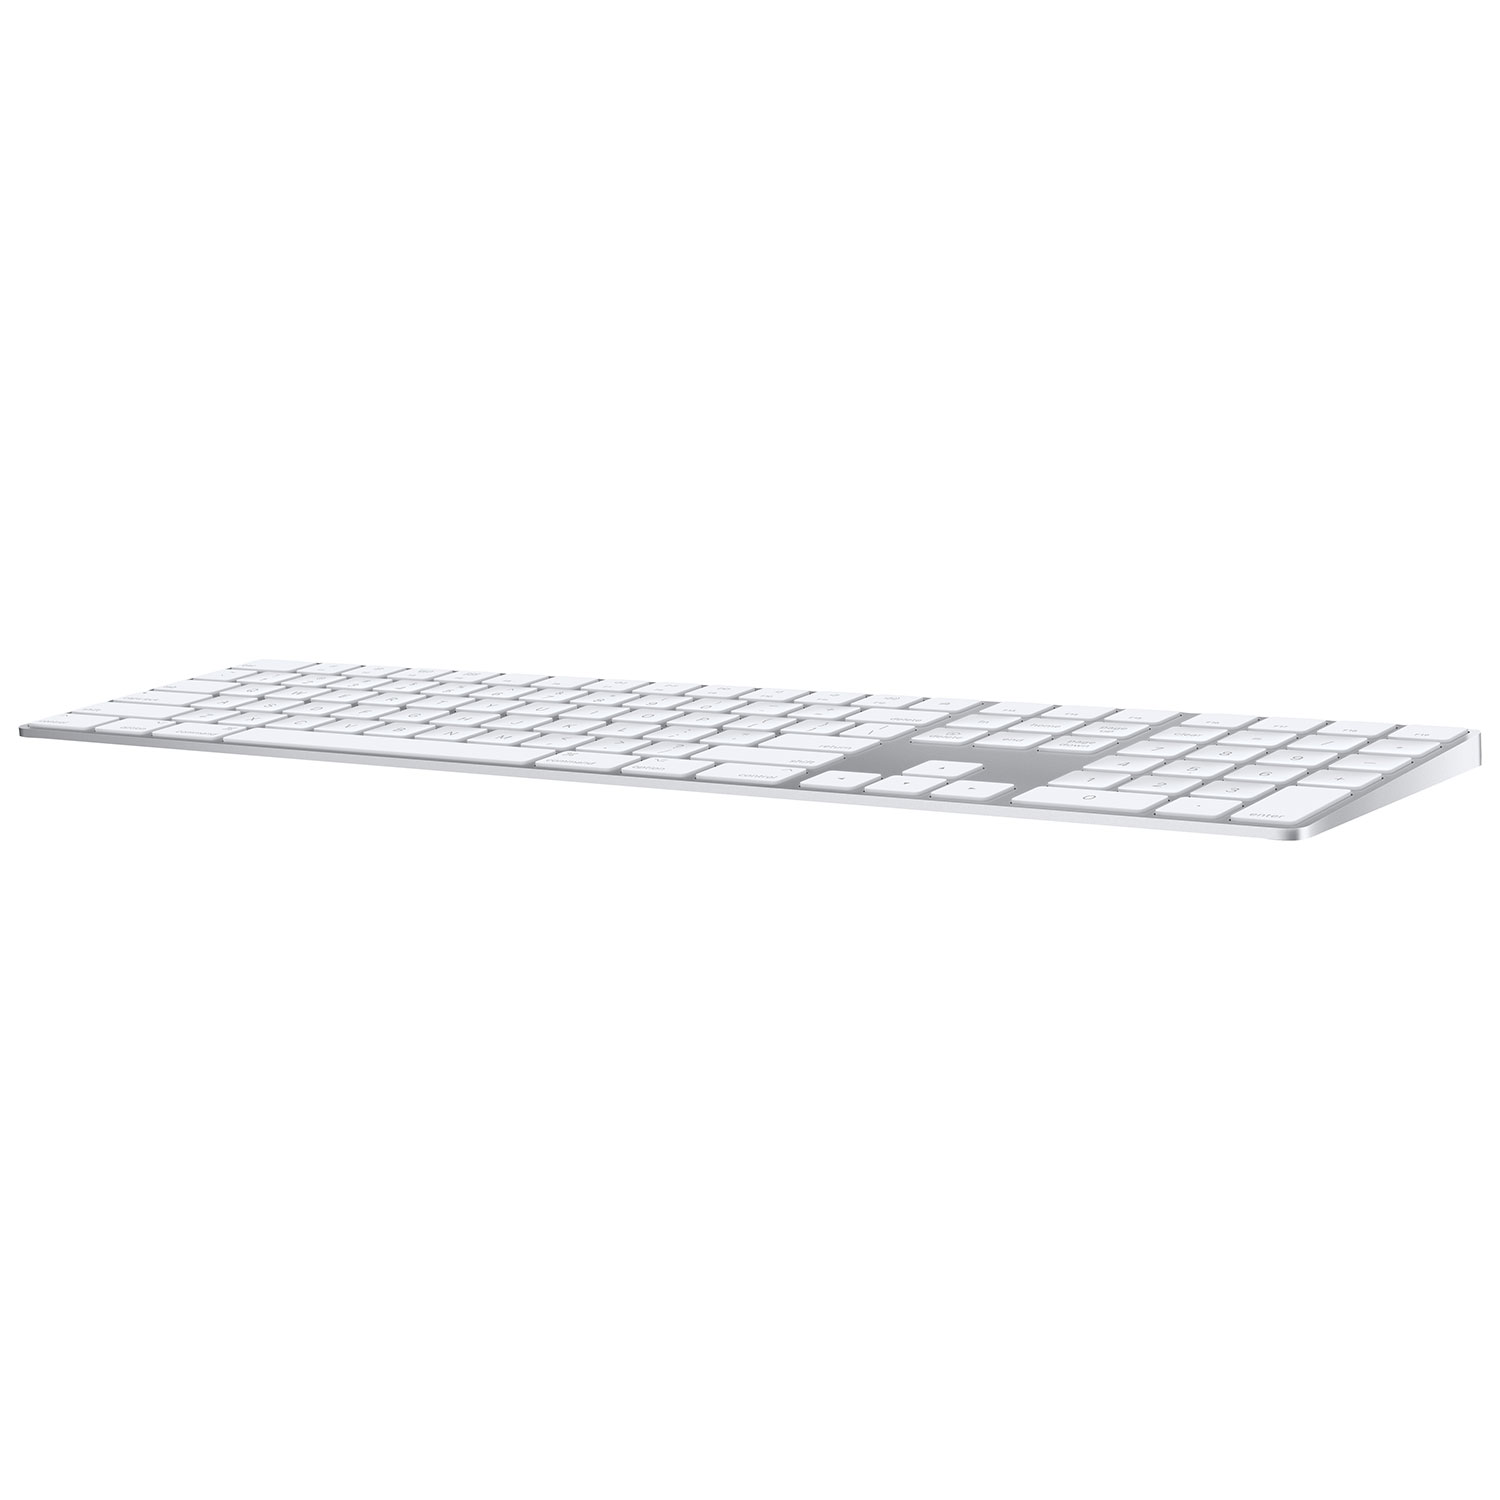 Apple Magic Keyboard with Numeric Keypad - Silver/White - English